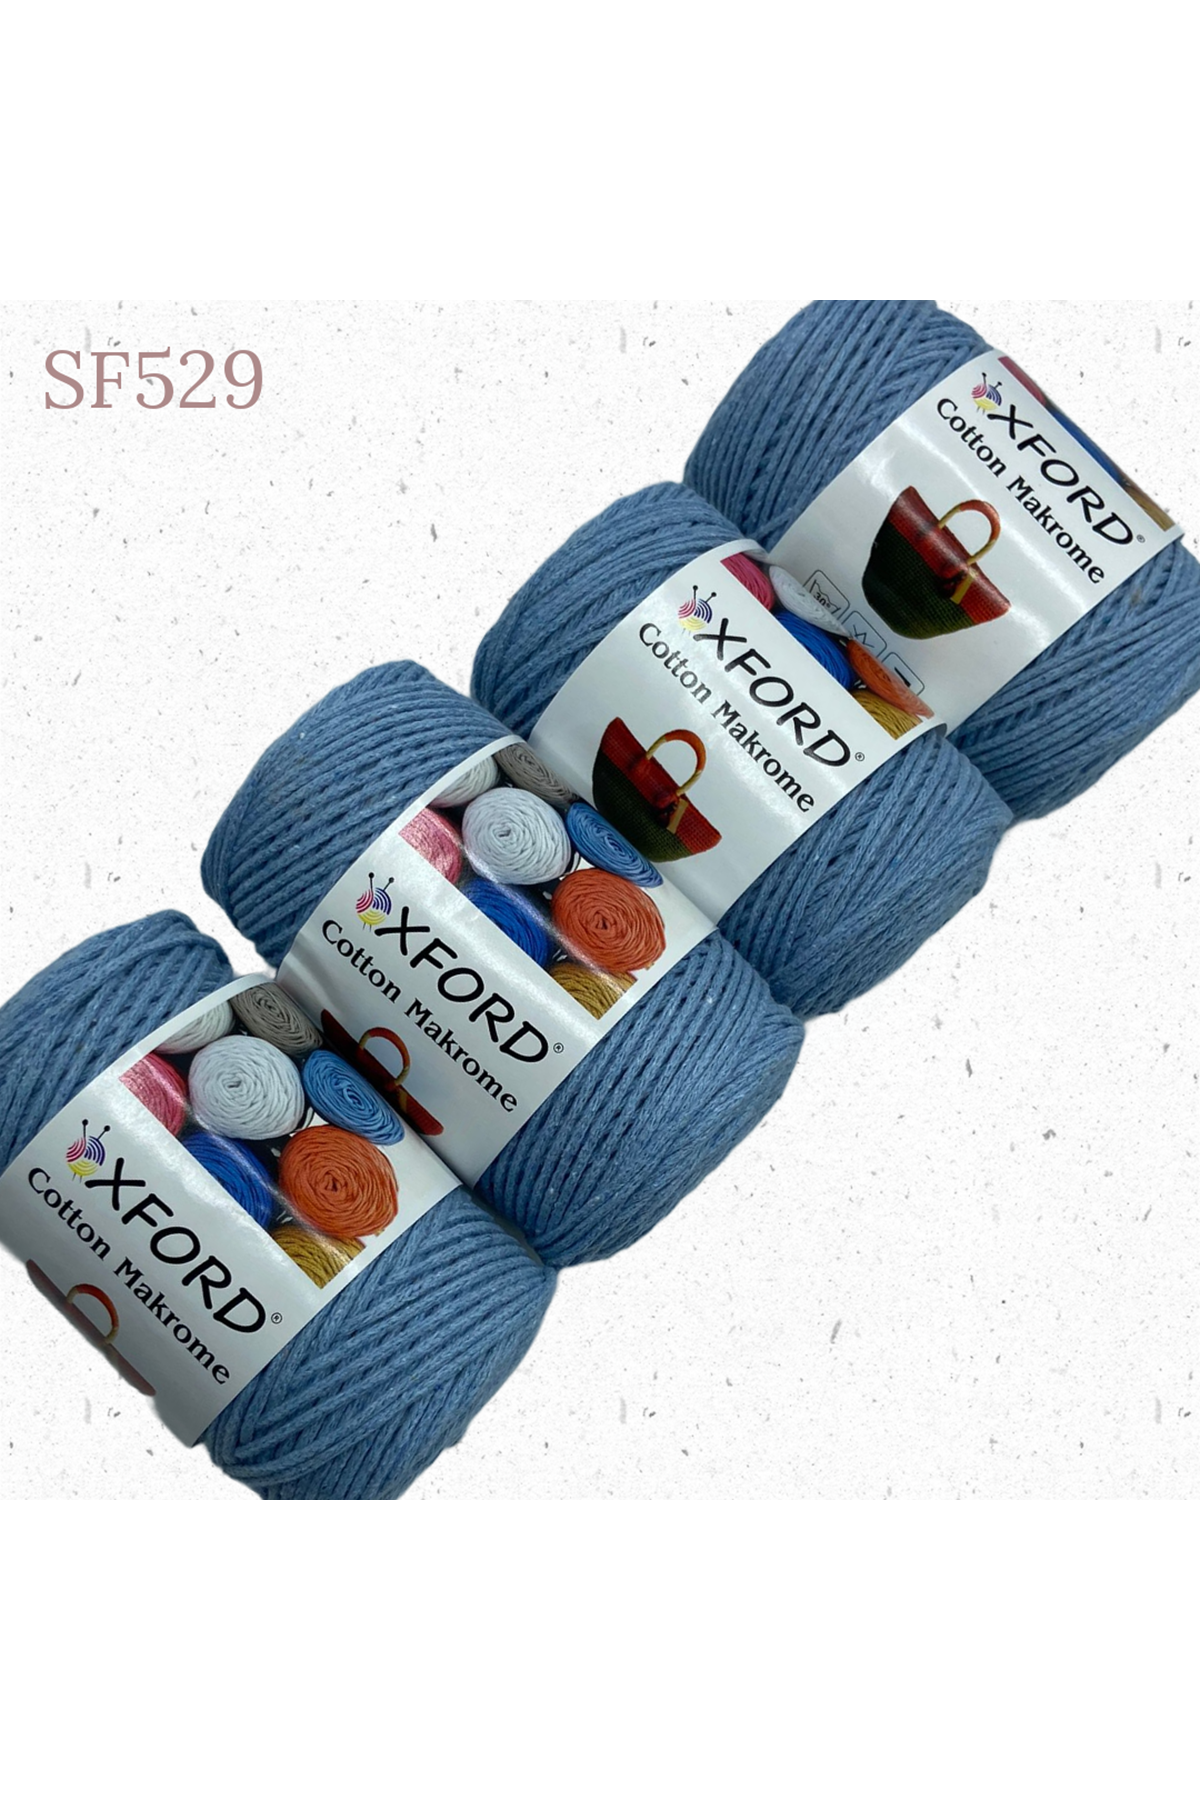 Stok Fazlası Cotton Makrome Mix 830 Gram SF529